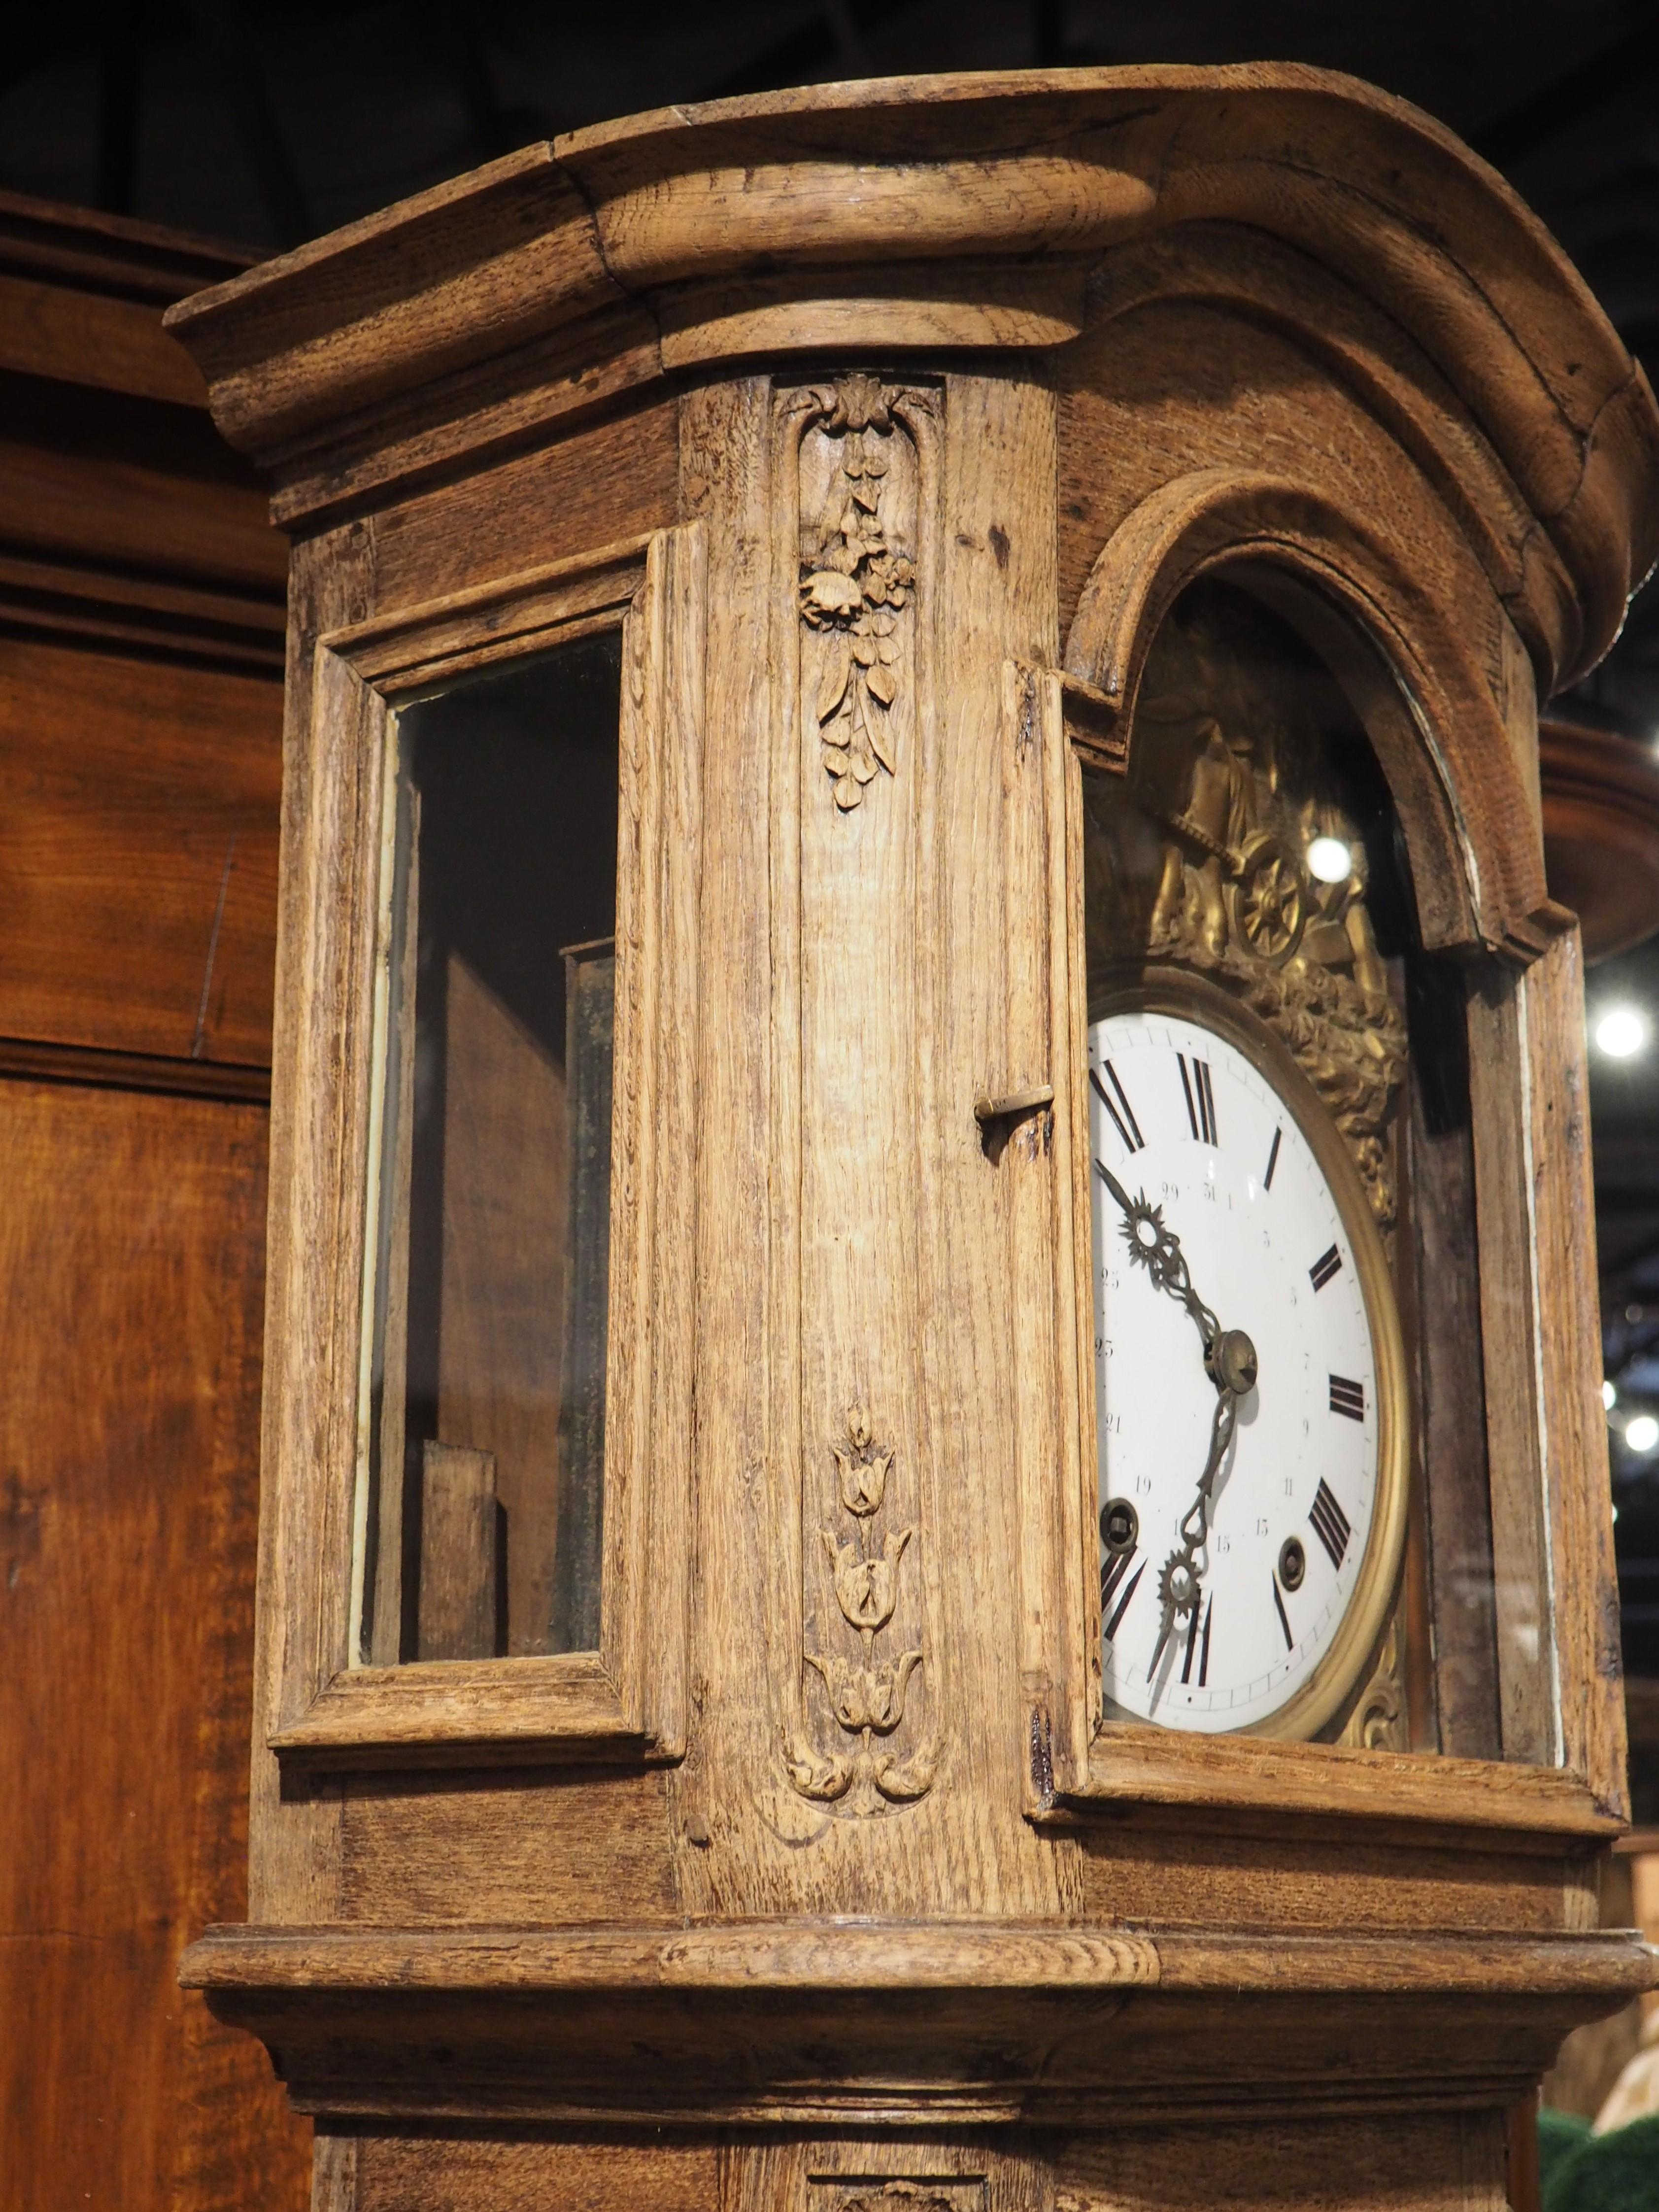 Late 19th Century Bleached Oak Horloge De Parquet Clock Case from Liege, Belgium, circa 1870